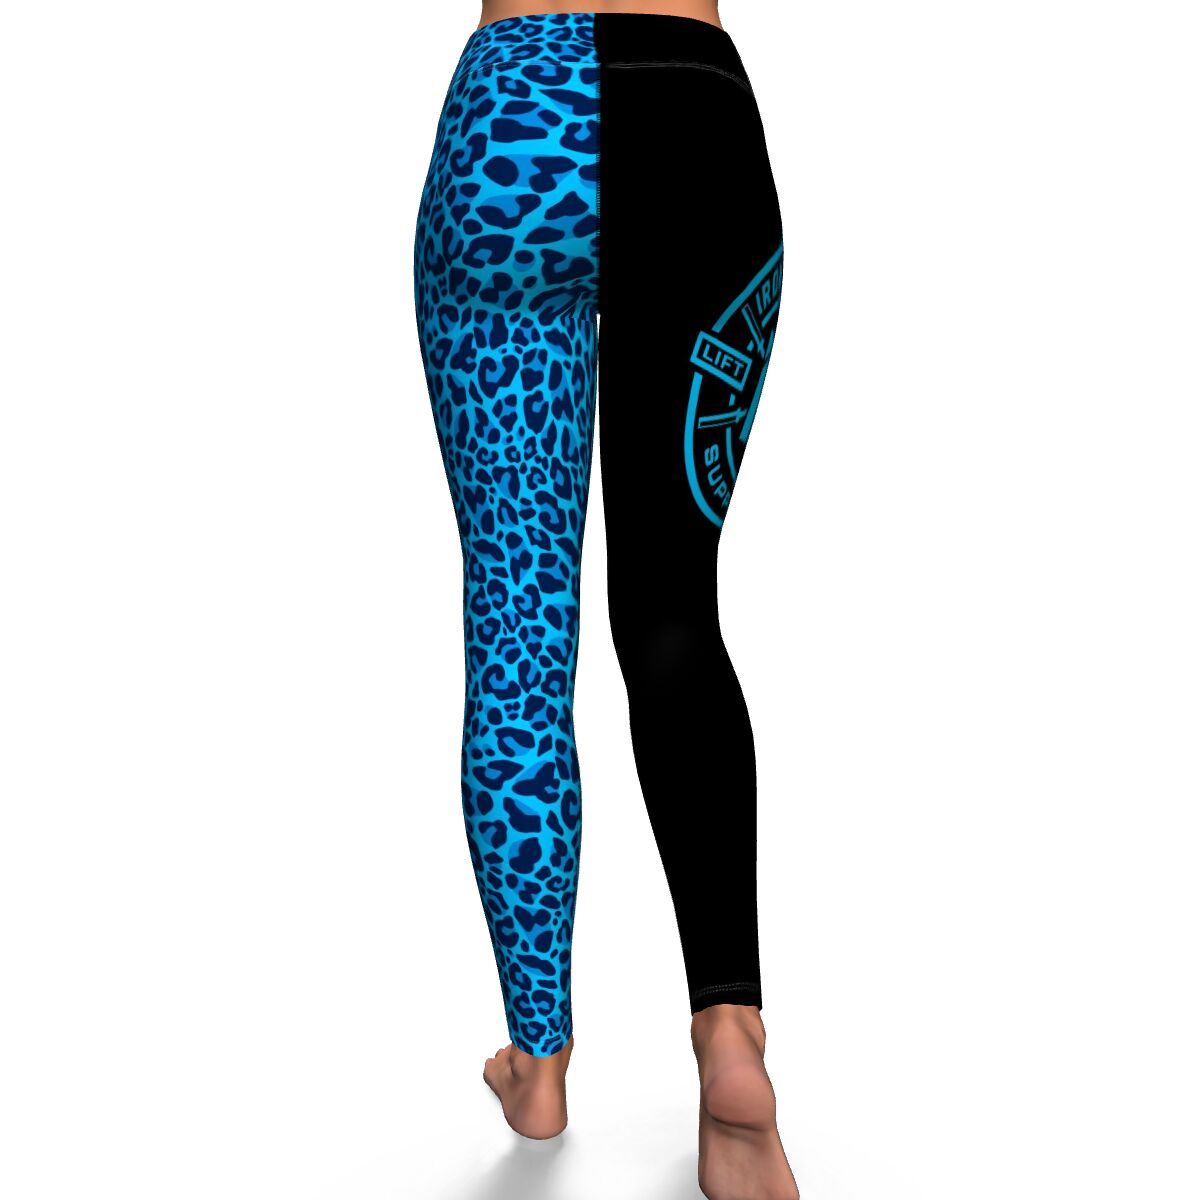 UUE 28Dark Blue Leopard Leggings,Gym leggings for women high waist,Squat  proof leggings for women with Pockets,For Women Sports and Fitness 